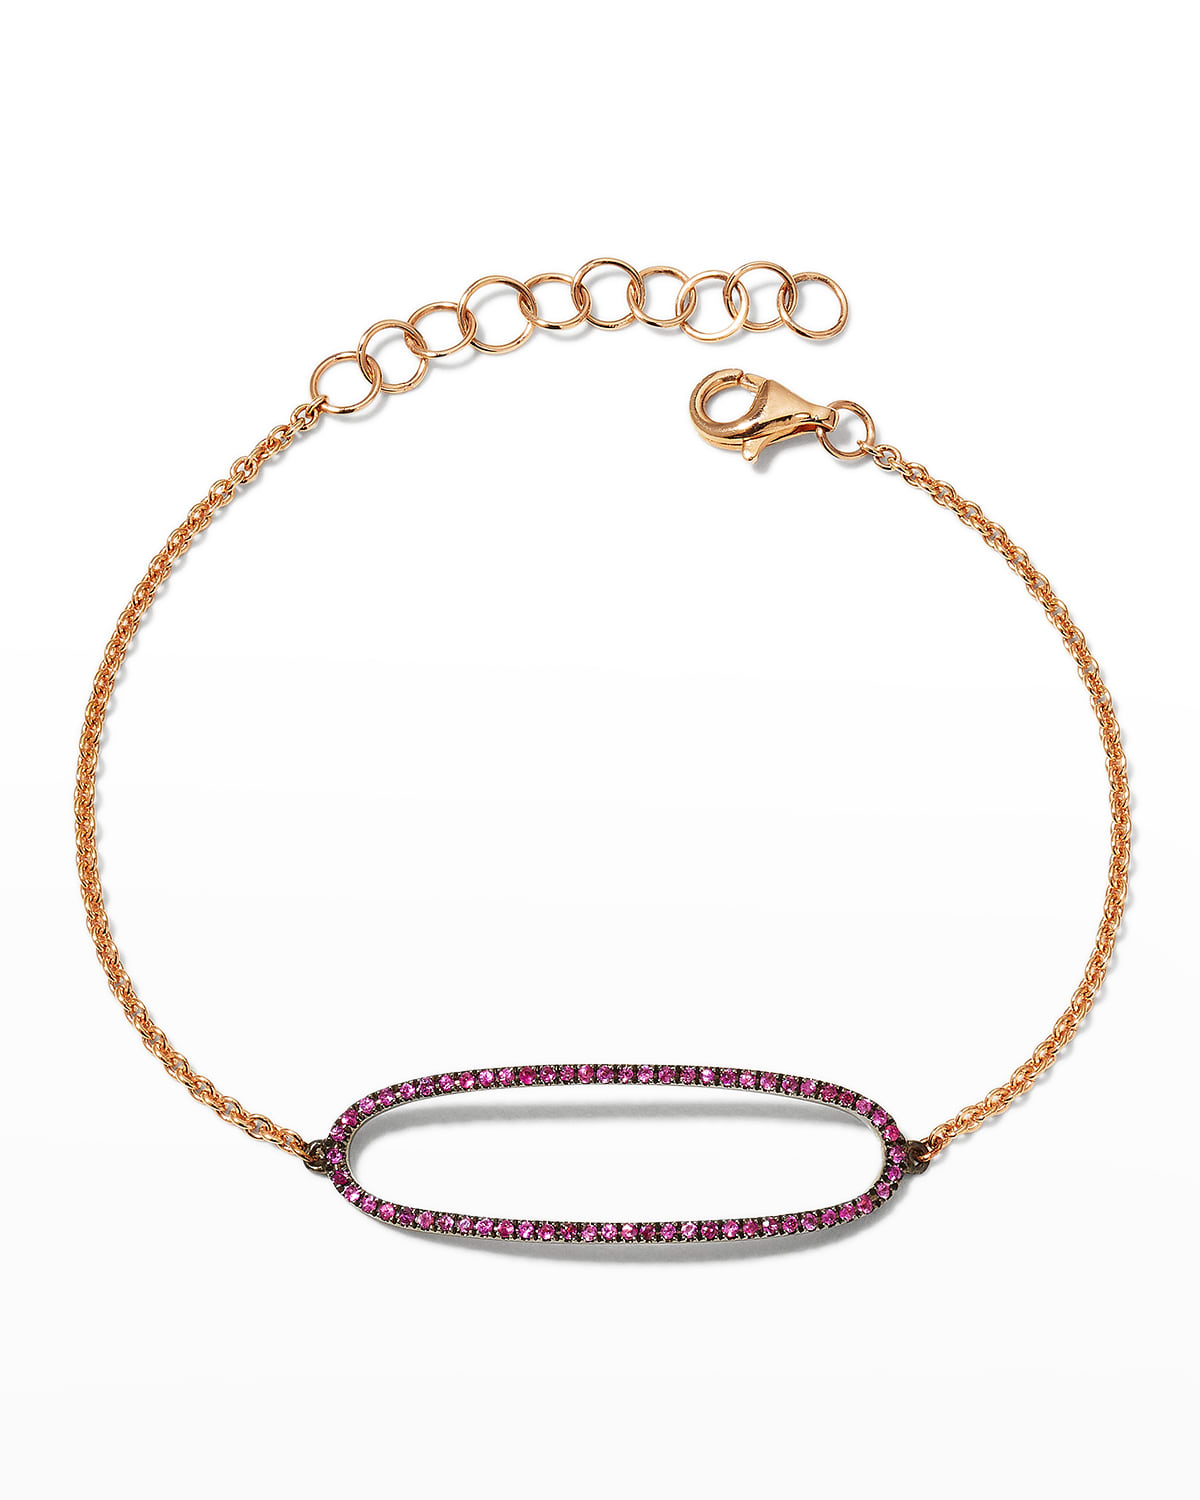 Bridget King Jewelry Pink Sapphire Oval Bracelet